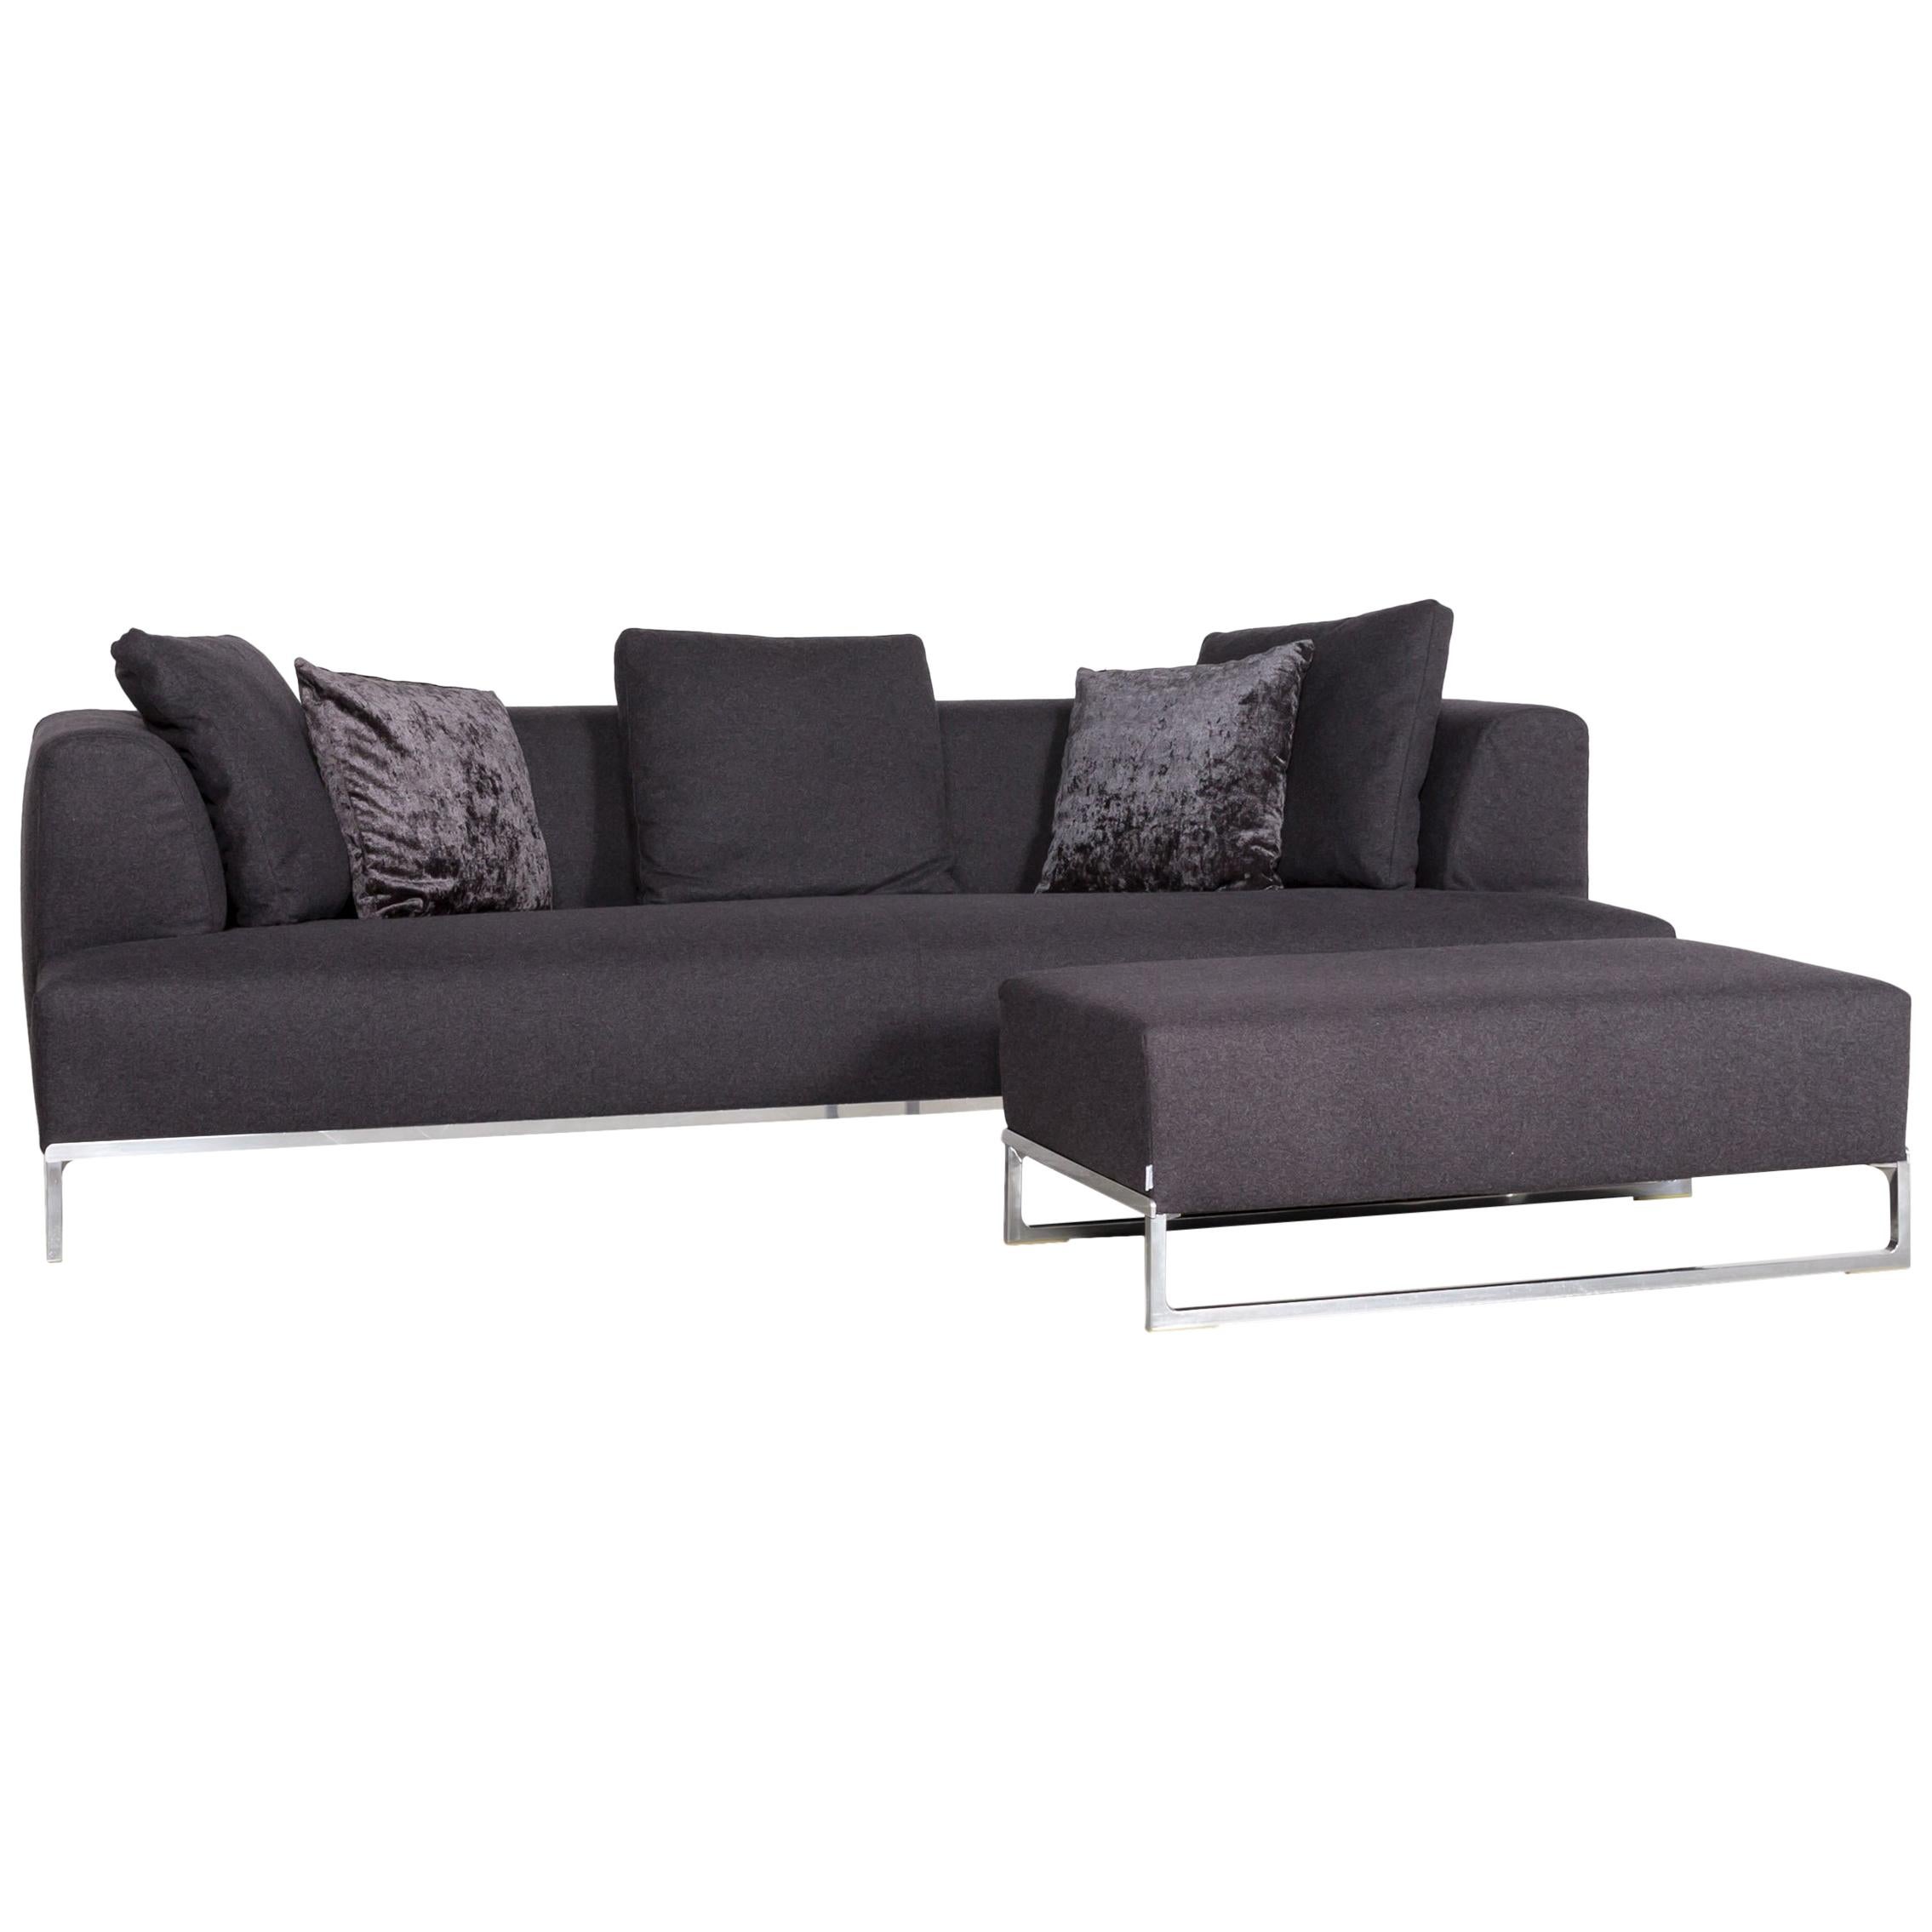 B&B Italia Solo Fabric Designer Sofa Set Three-Seat Couch Stool Anthracite Grey